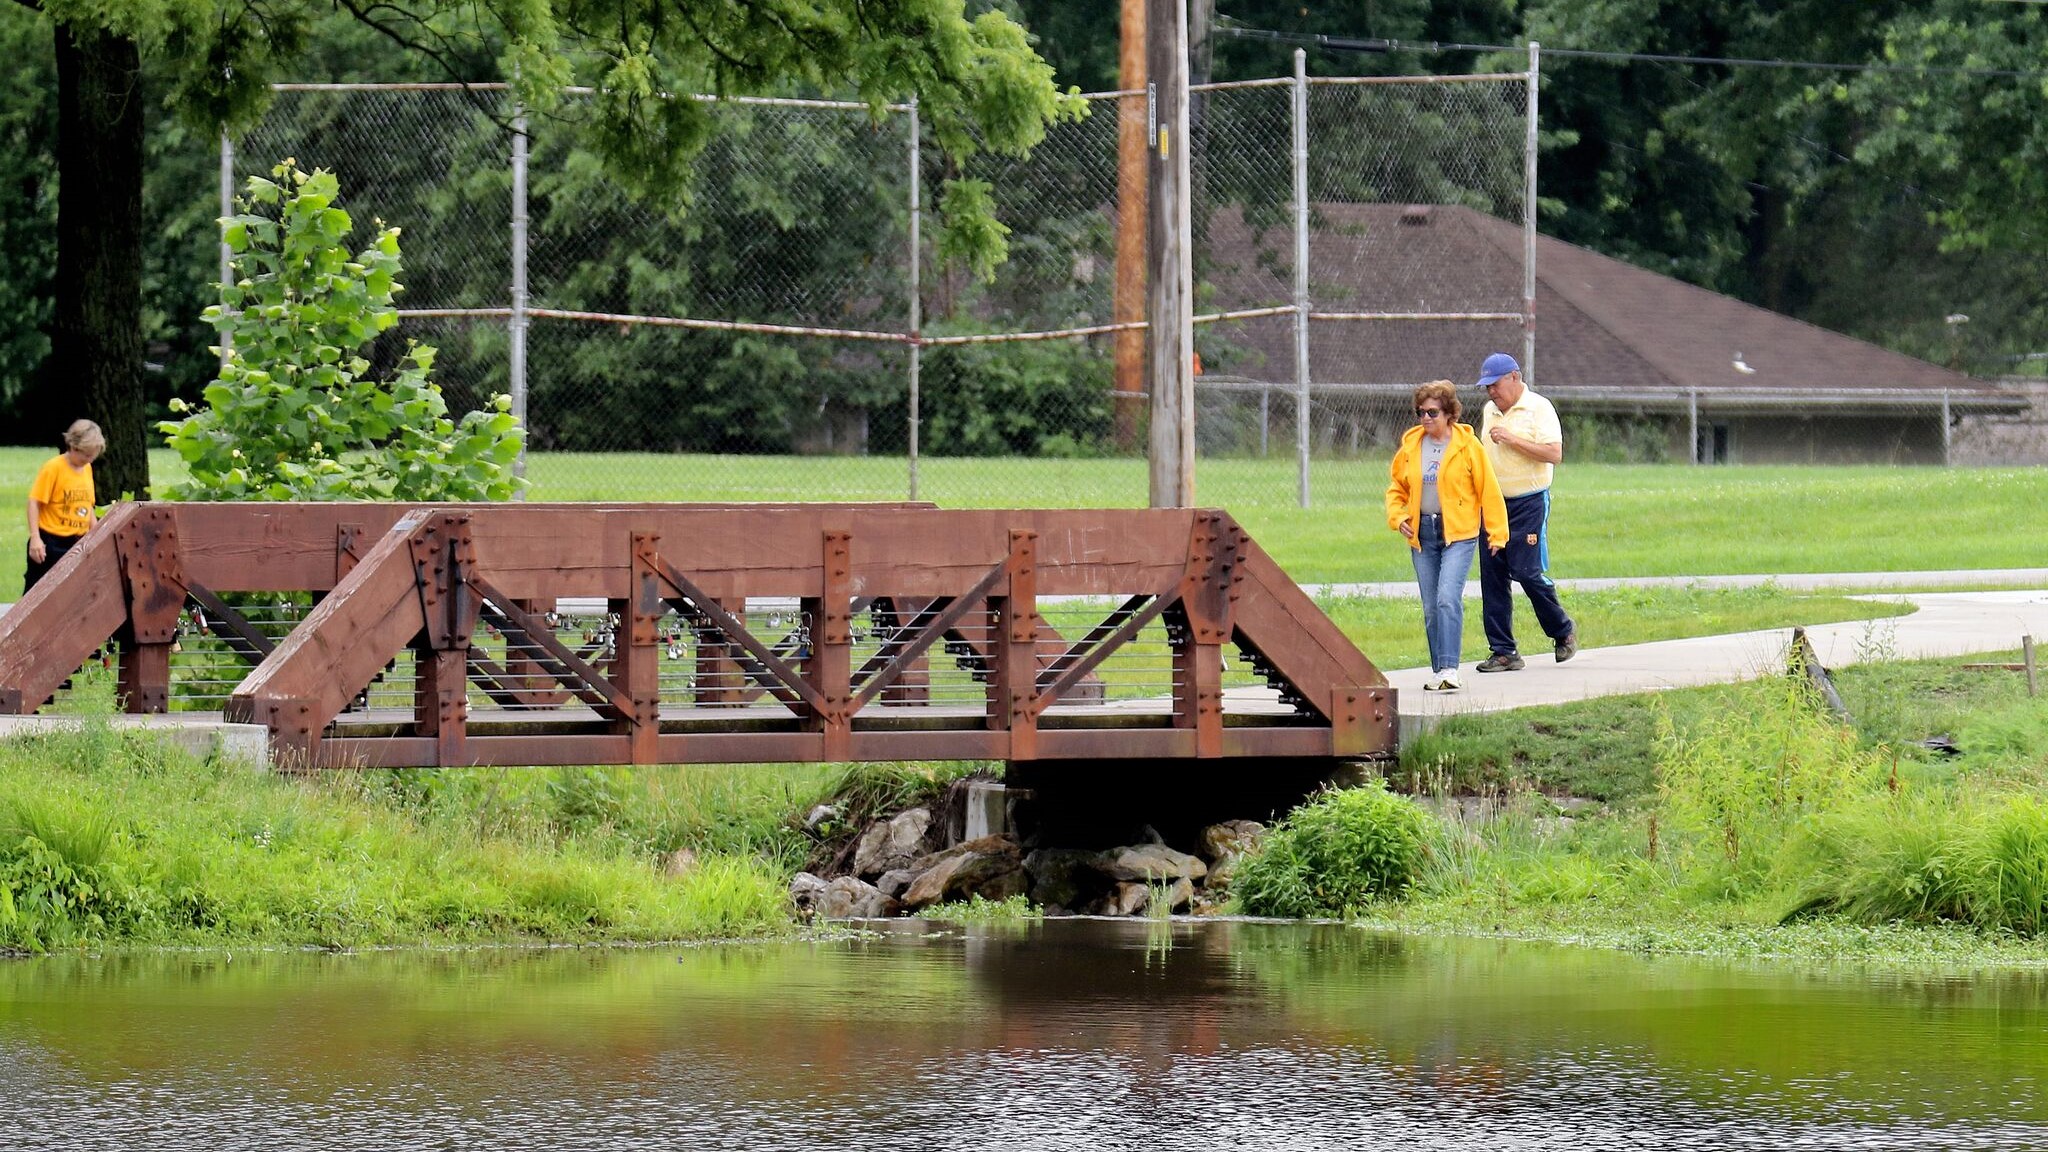 People walking on the bridge in Lakewood Green